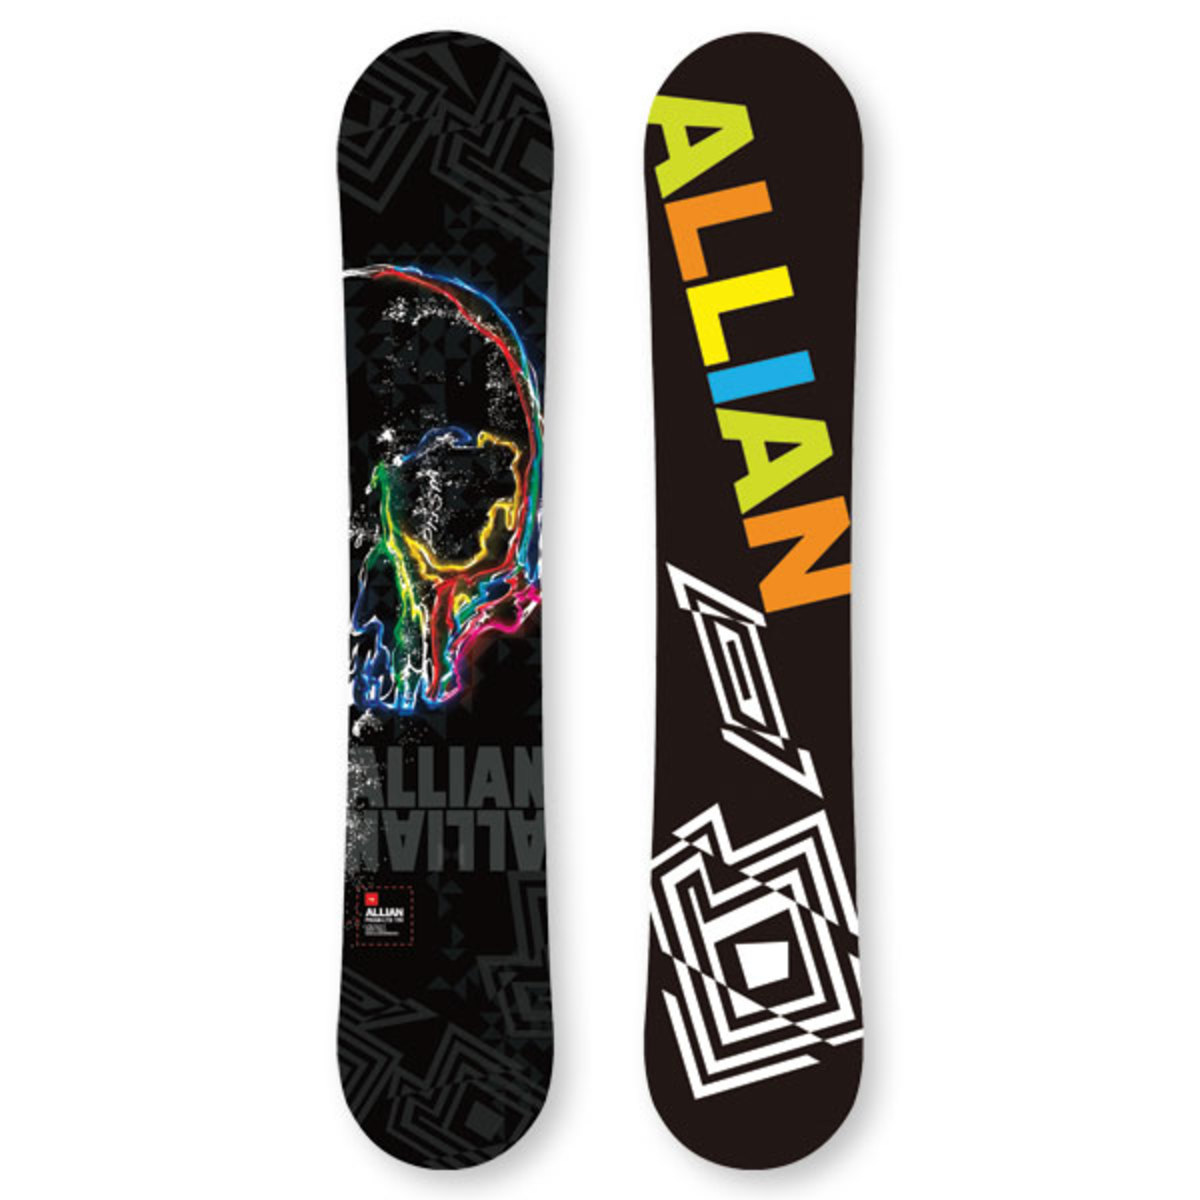 Buy Allian Prism LTD Snowboard - Shop for Snowboard Gear at